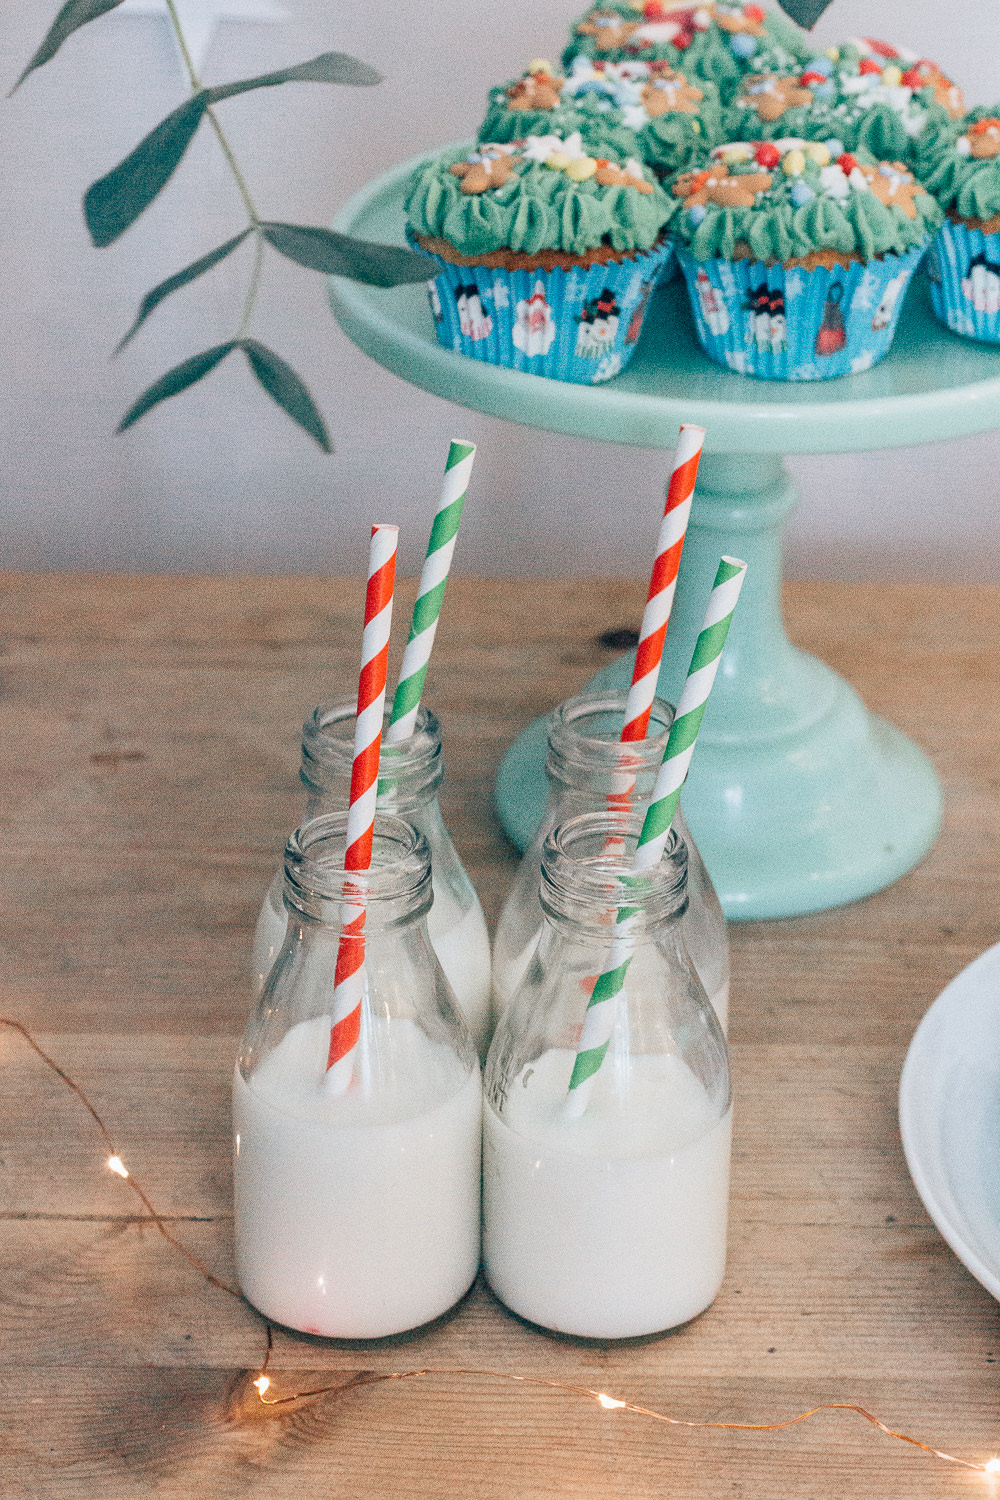 Mini milk bottles with festive paper straws